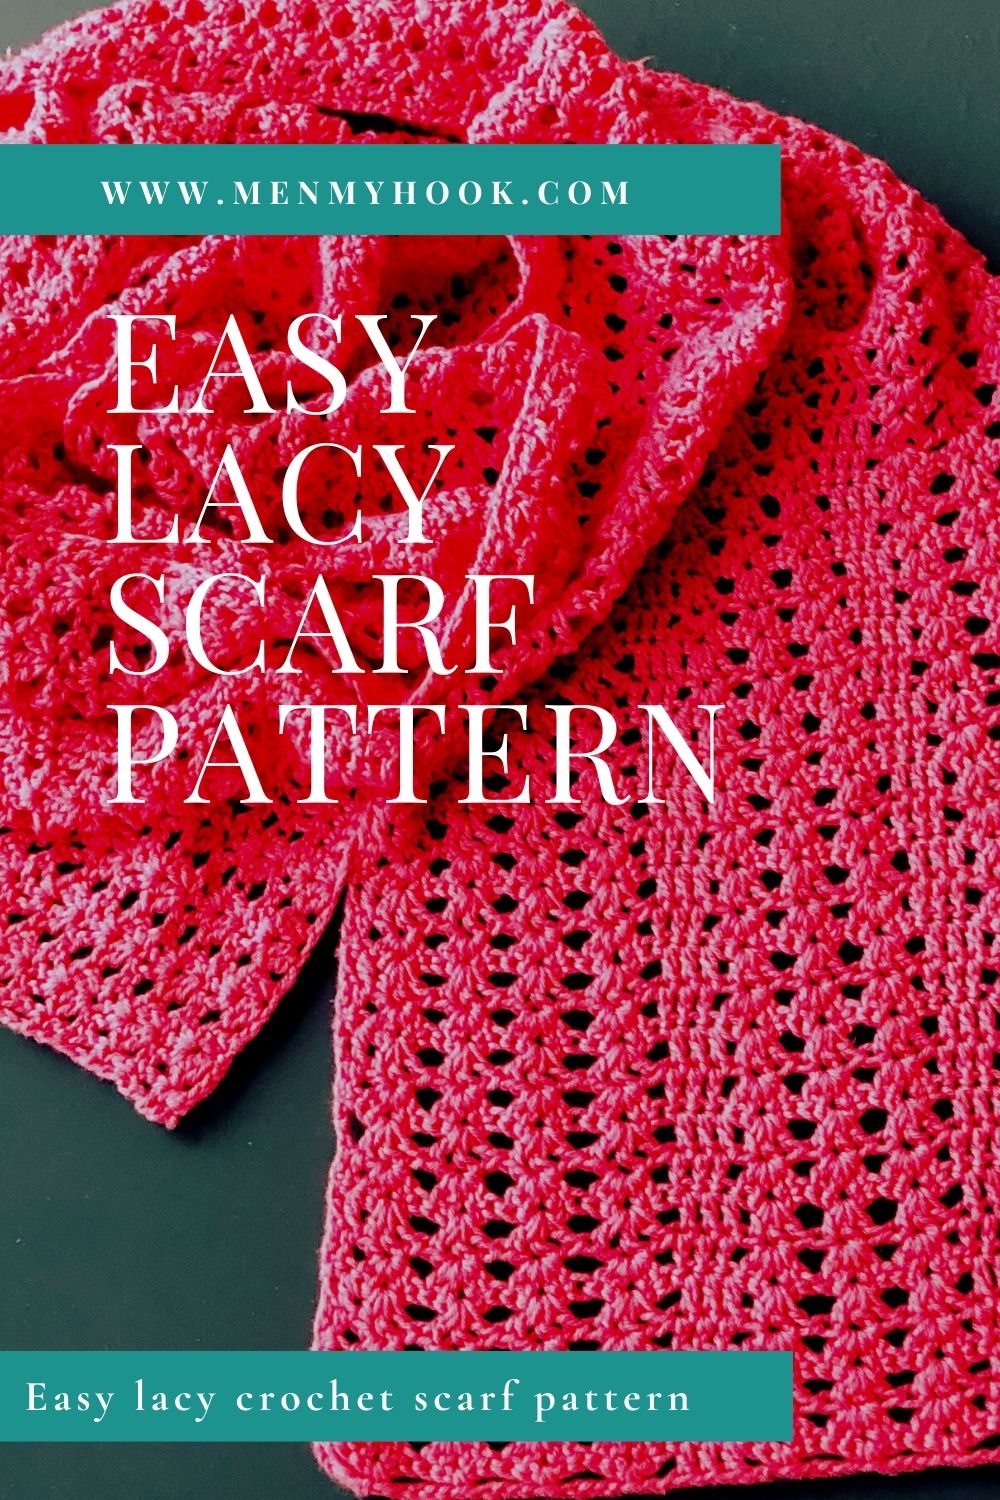 Easy Lacy Crochet Scarf